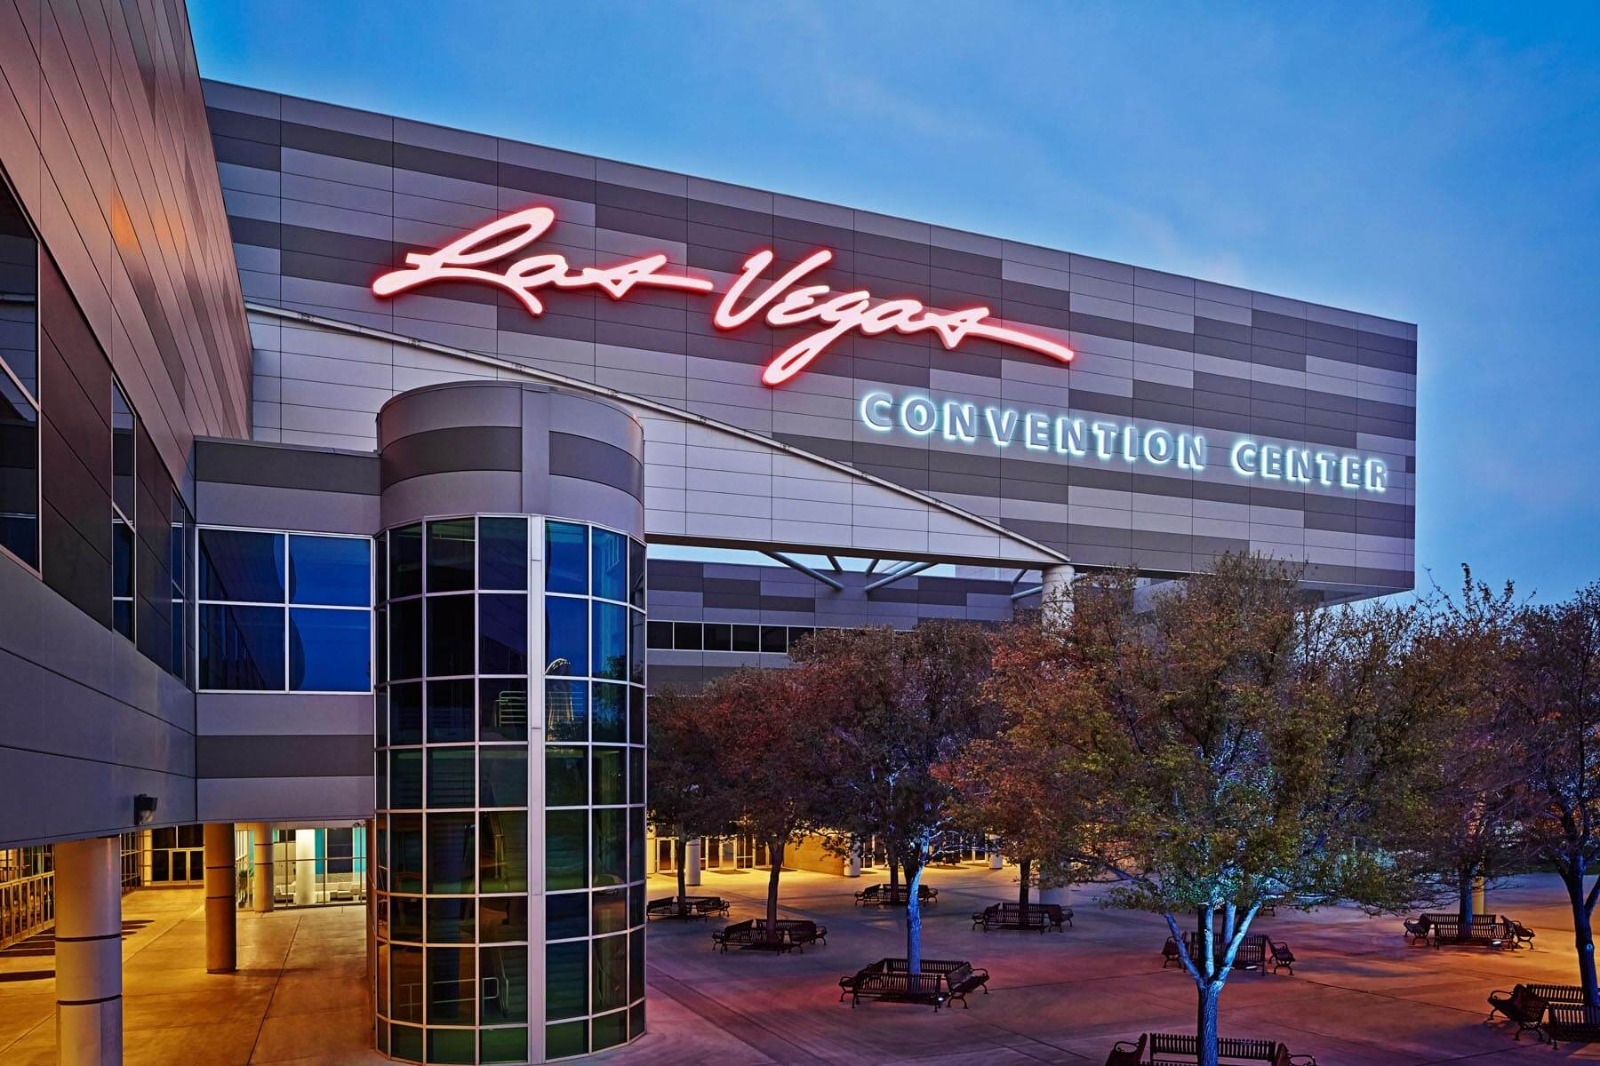 Las vegas convention center